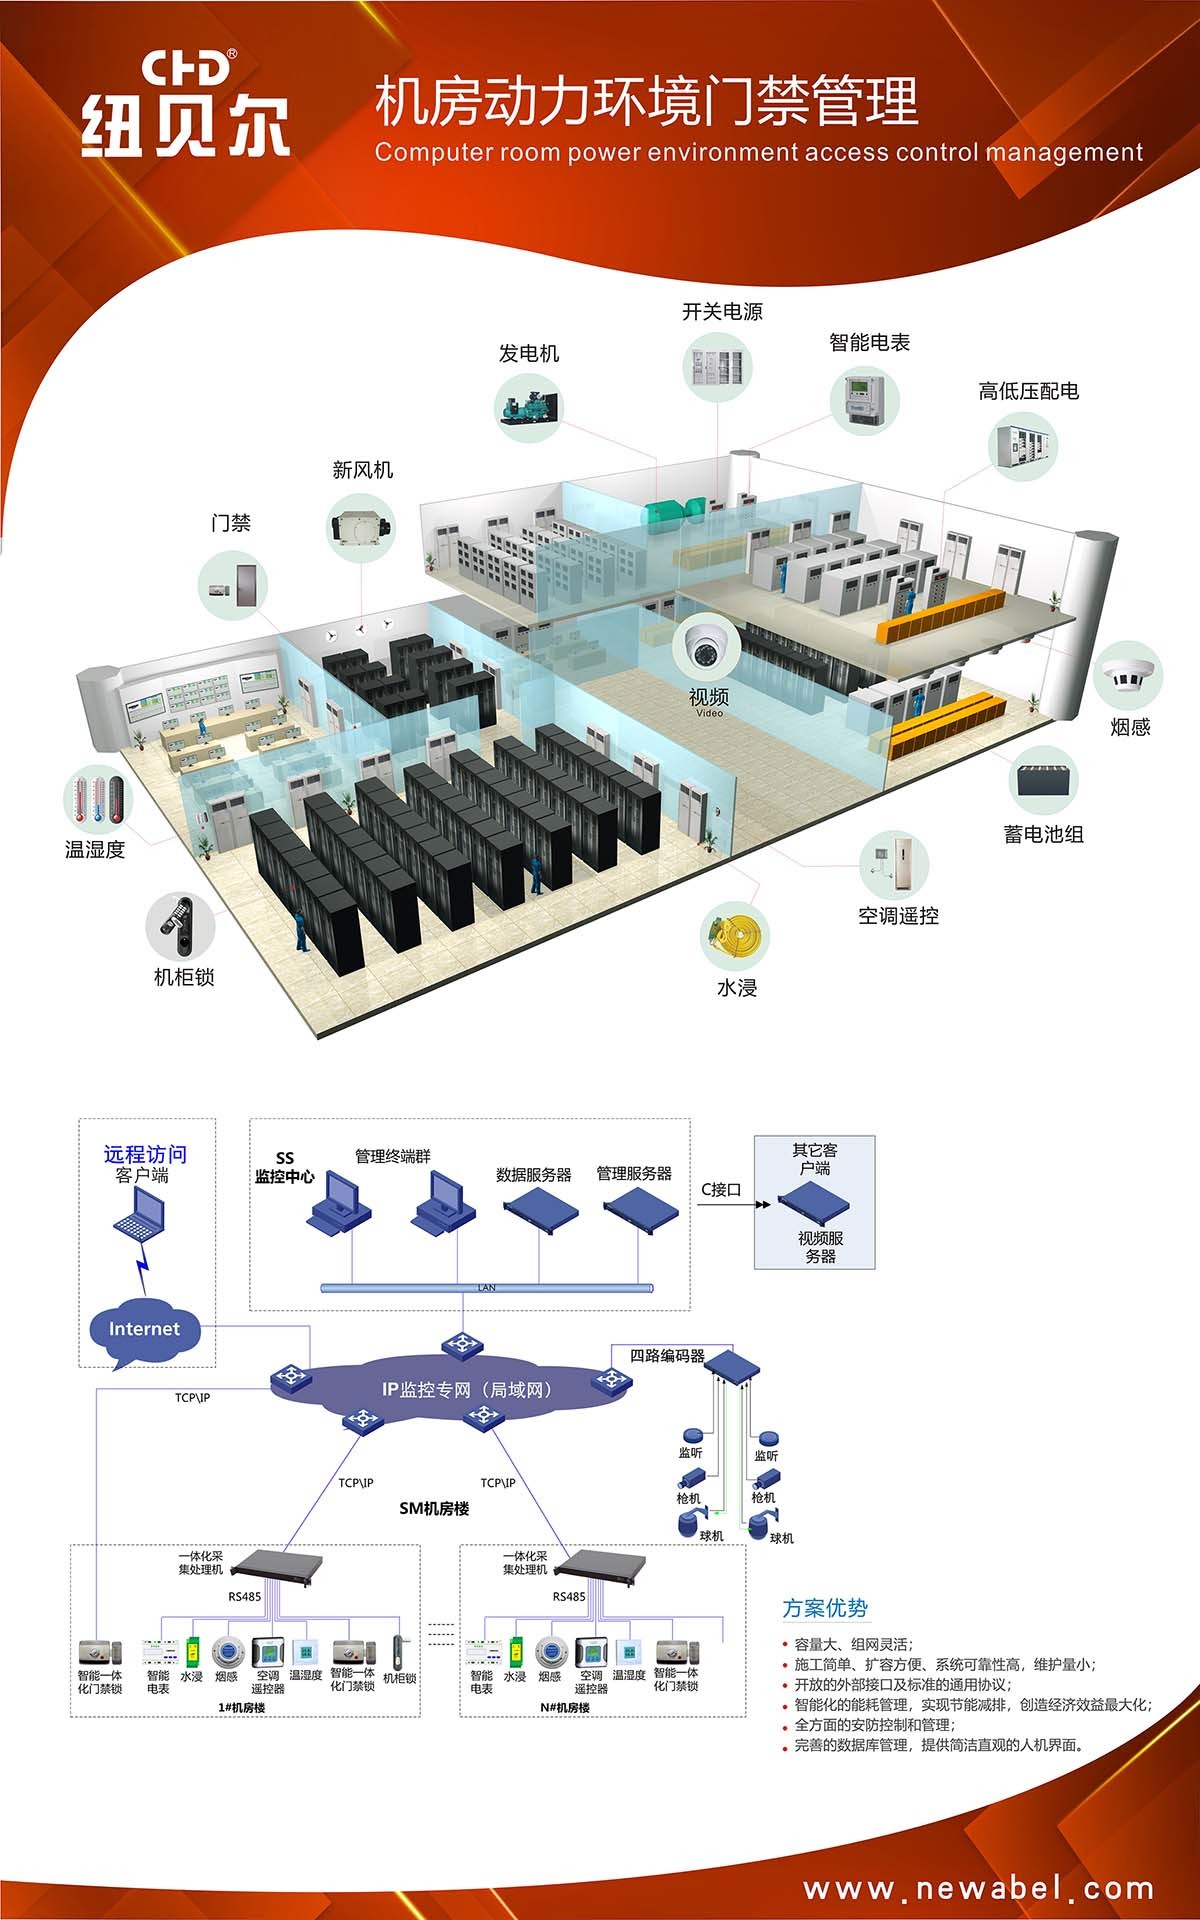 Power environment management of equipment room